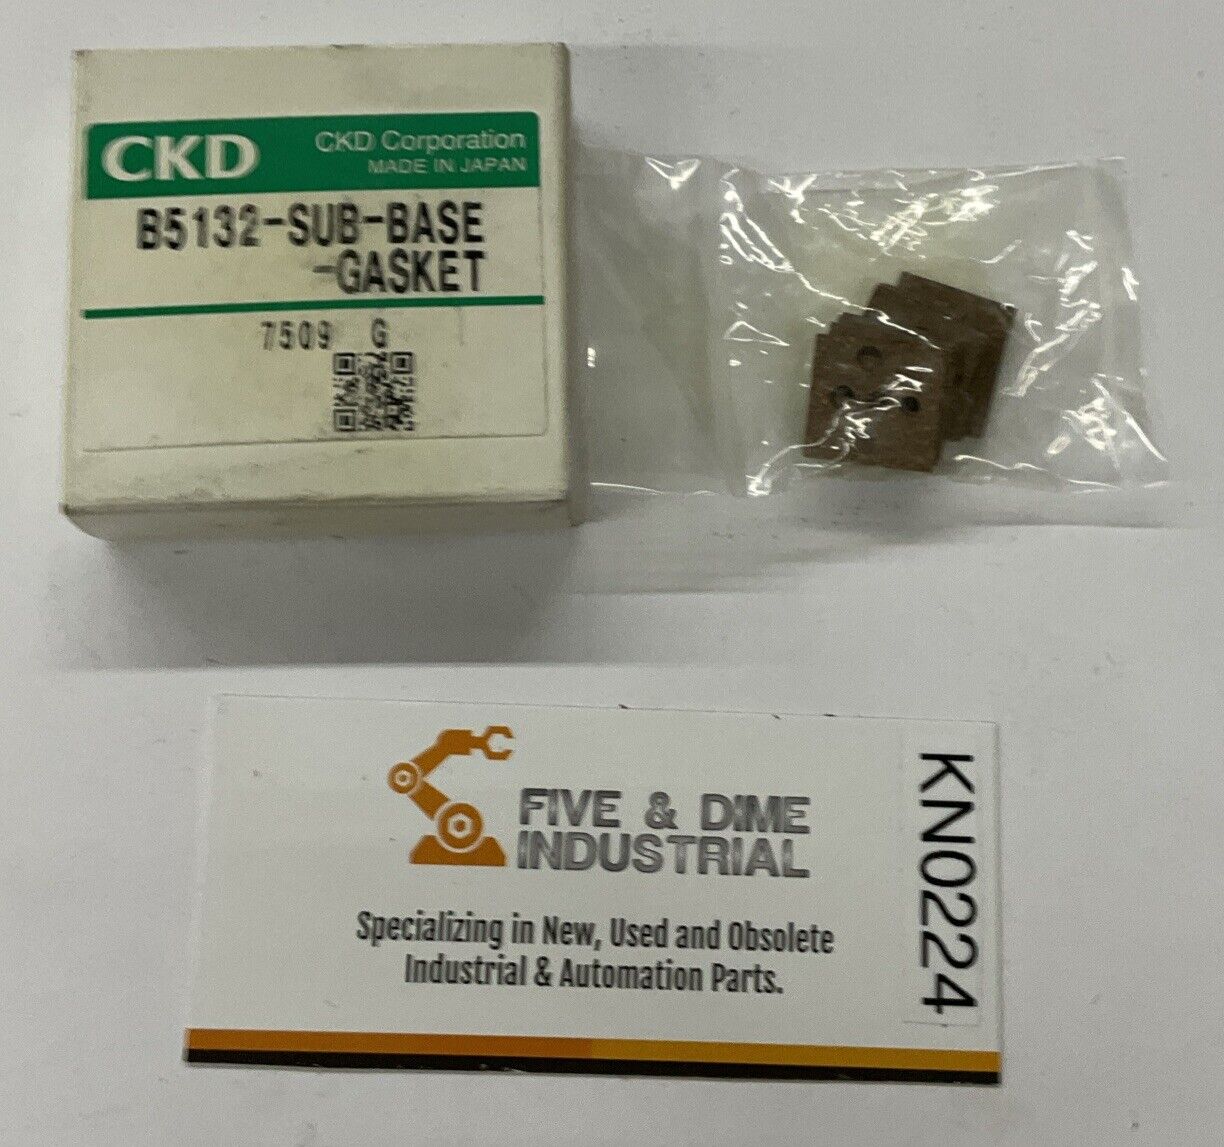 CKD B5132 Box of 30 Sub Base Gaskets (BL282)